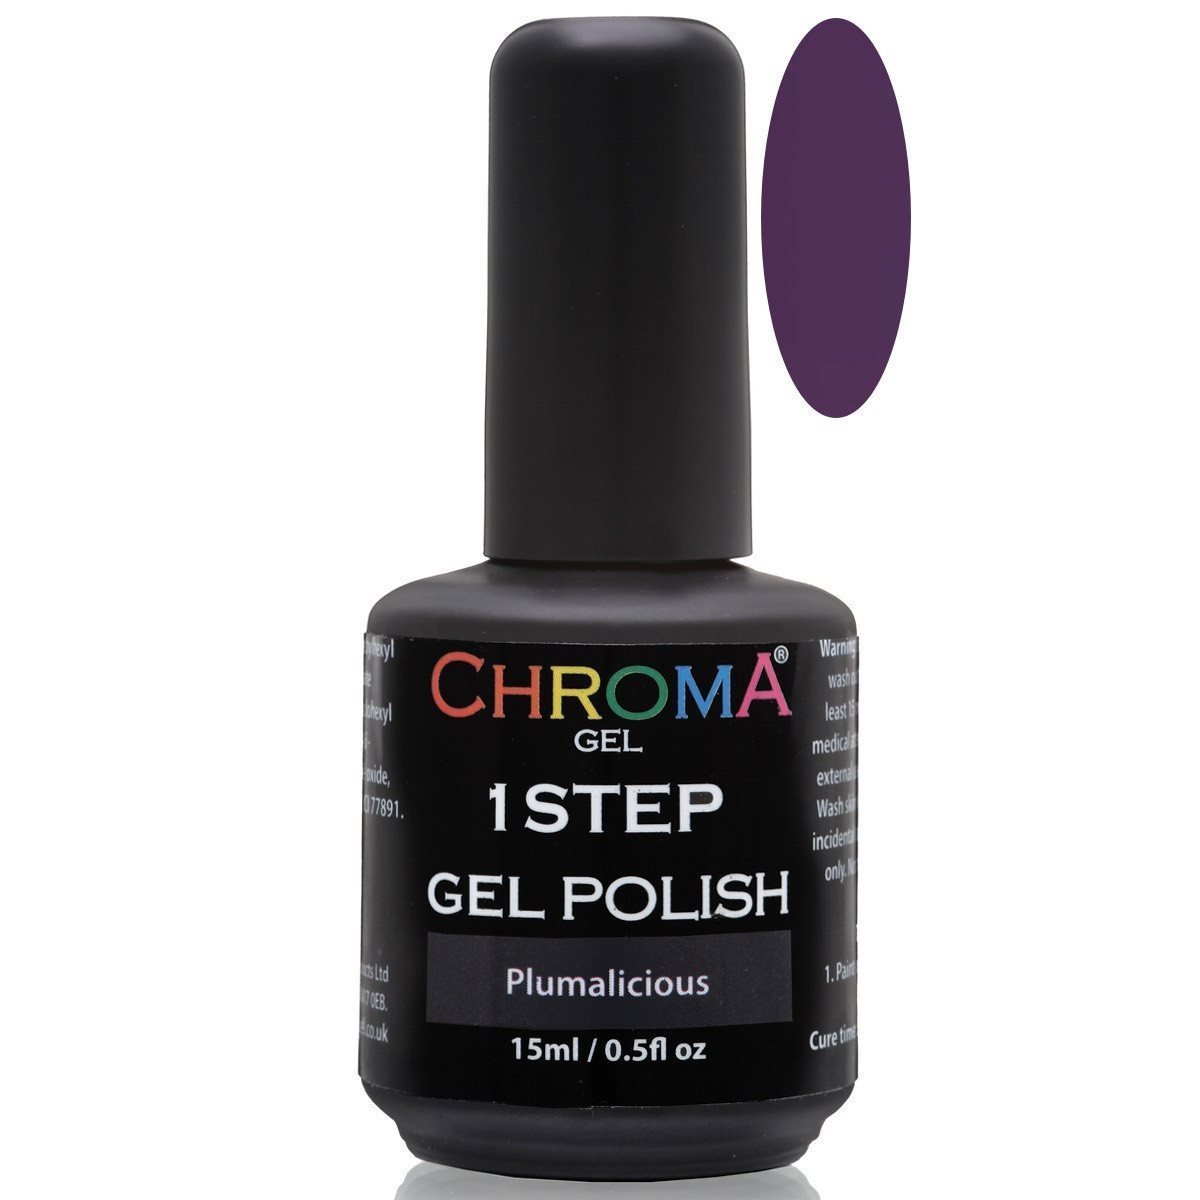 Chroma Gel 1 Step Gel Polish in Plumalicious No.51 - beautyhair.co.ukChroma Gel